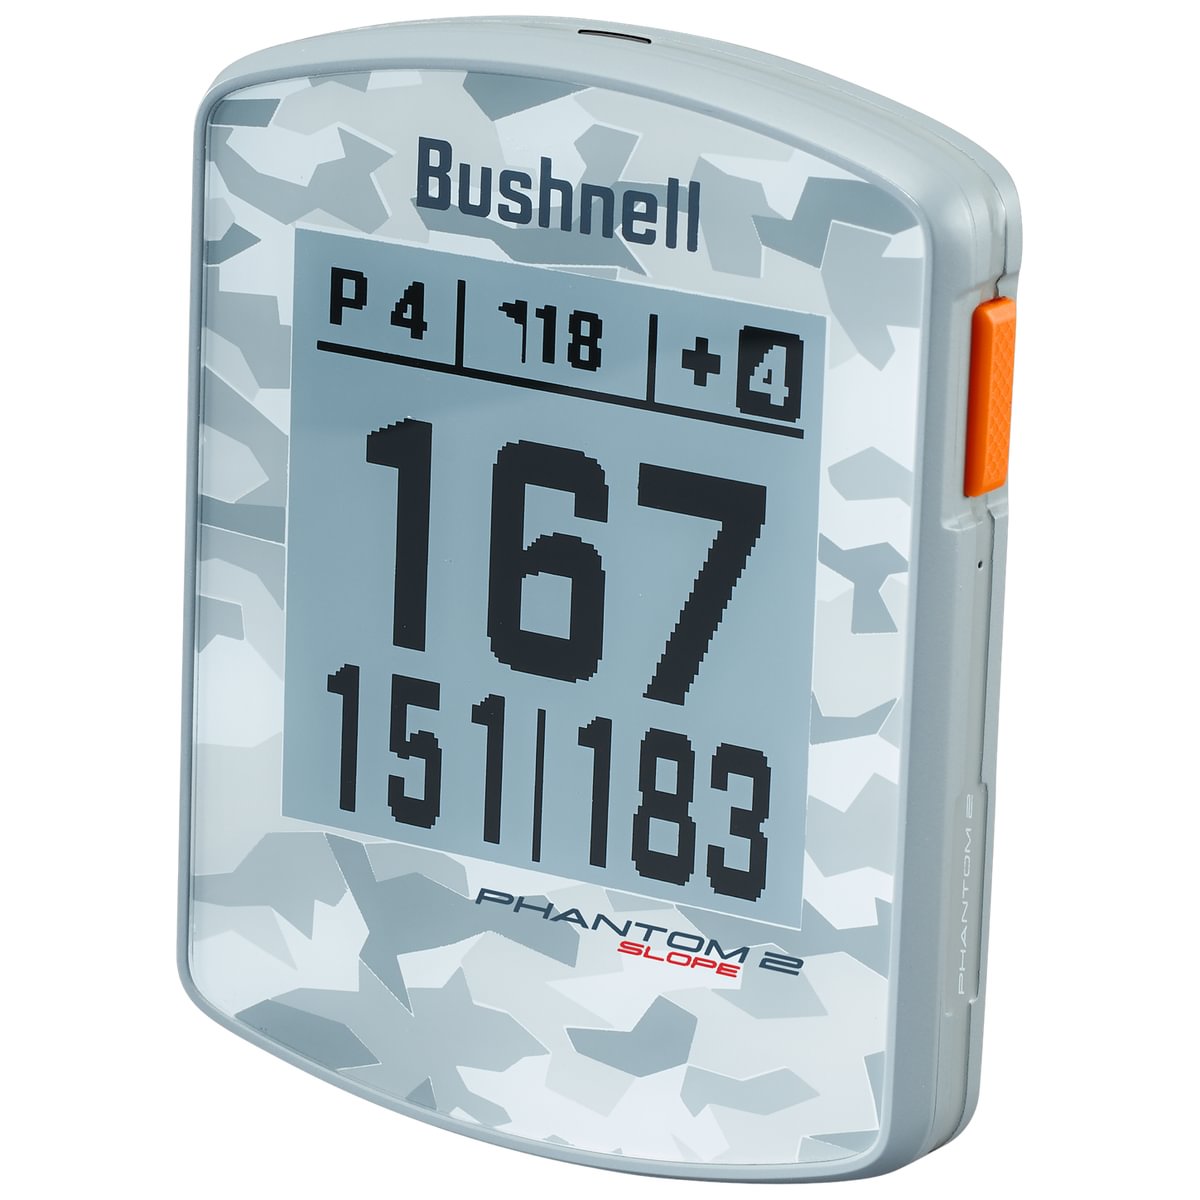 BUSHNELL GOLF LAUNCHES PHANTOM 2 SLOPE GPS DEVICE | Golf Retailing